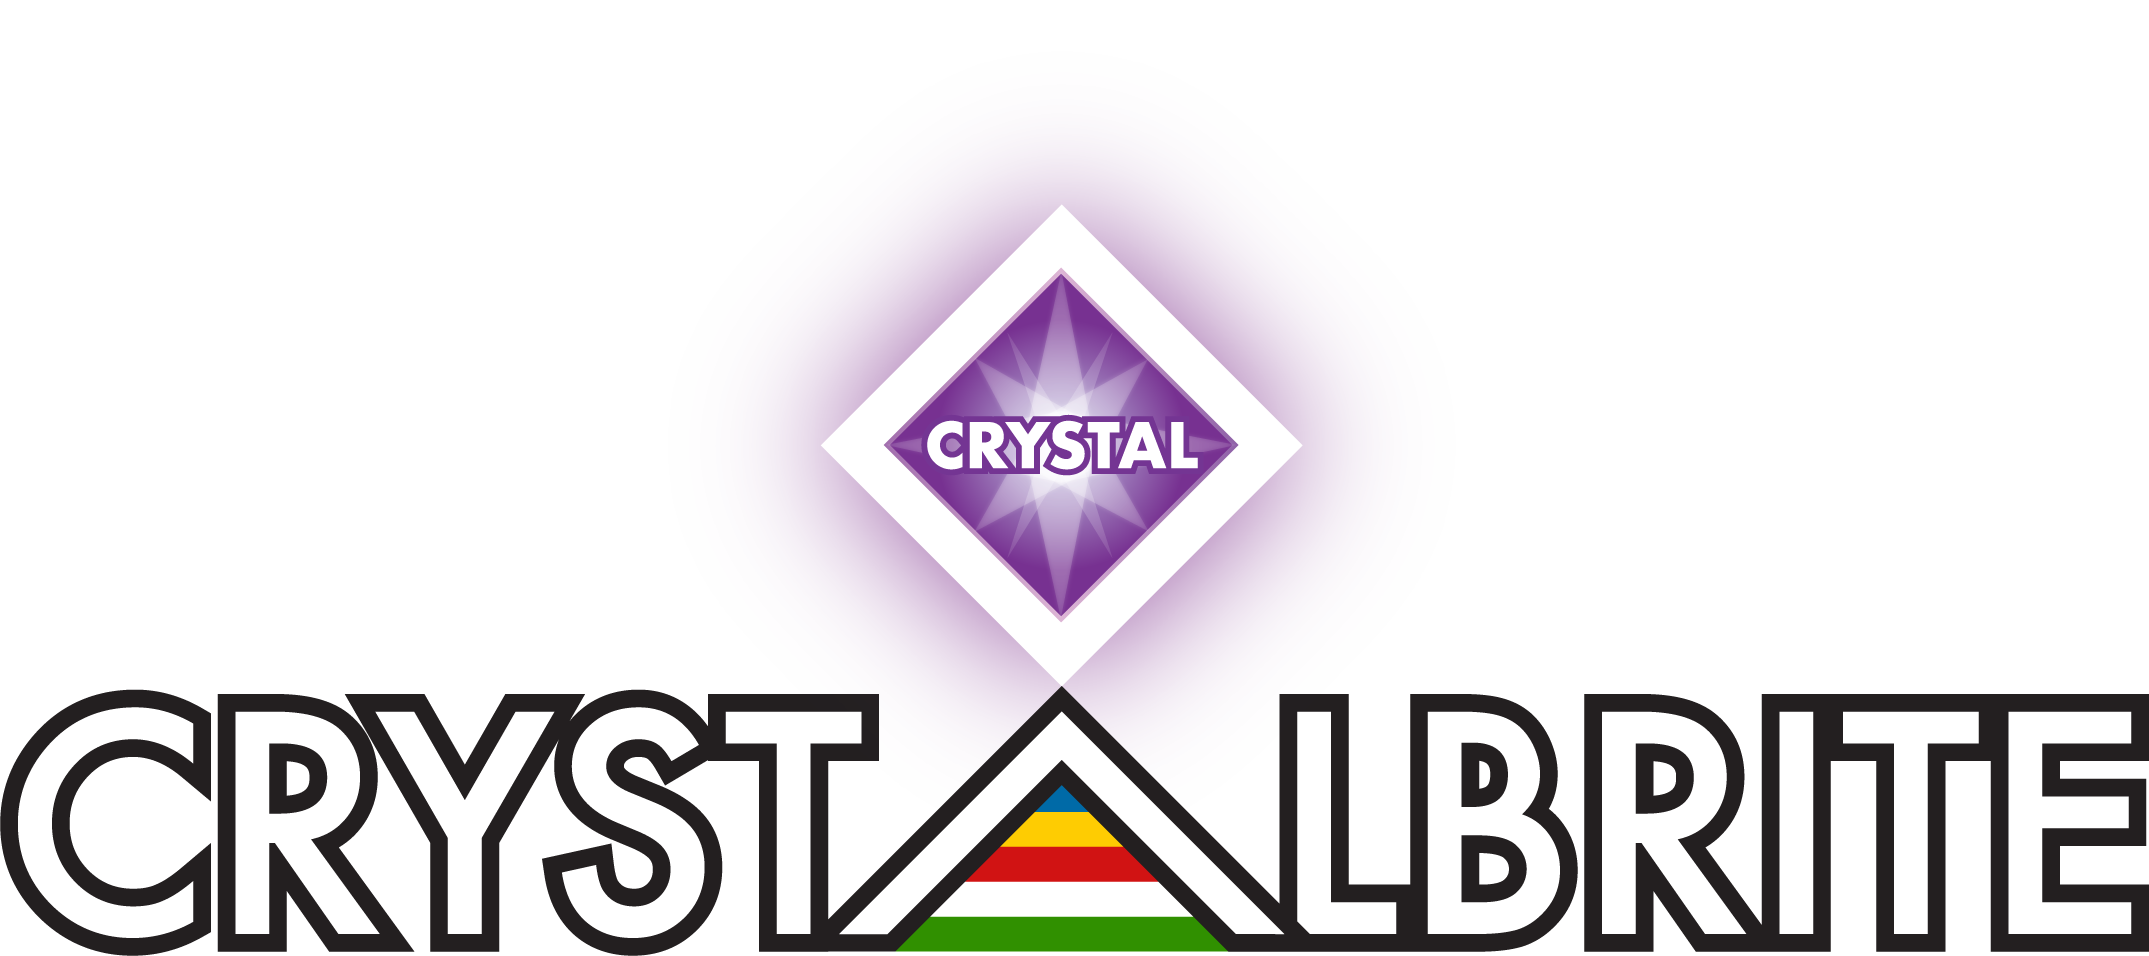 Crystalbrite